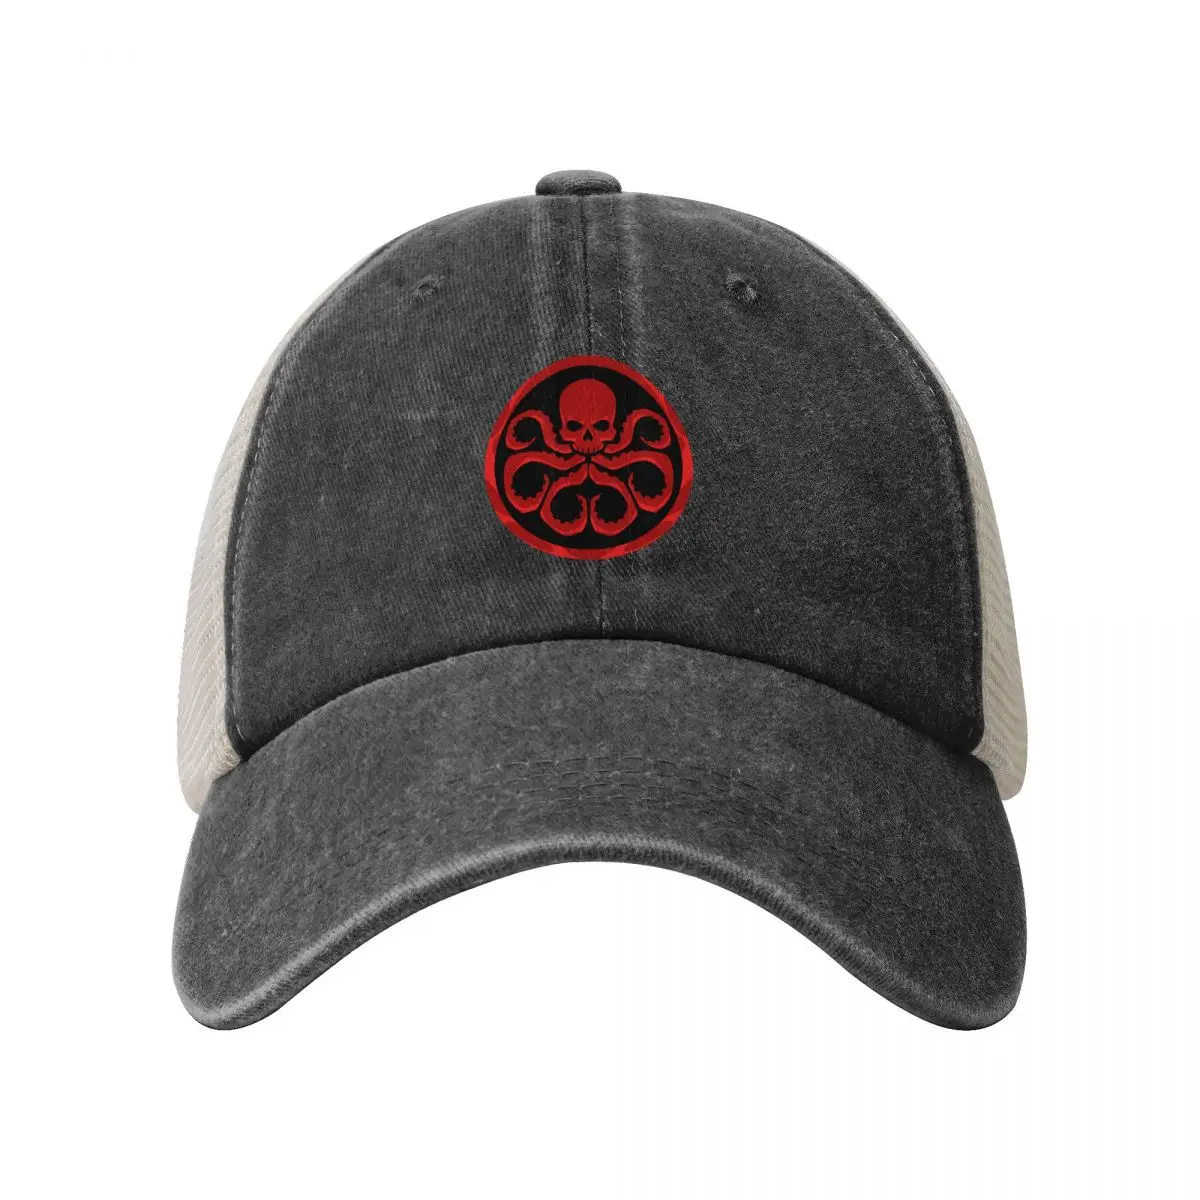 Hail Hydra Cowboy Mesh Baseball Cap Hat Man For The Sun Streetwear |-F-| Sunscreen Hats Woman Men's